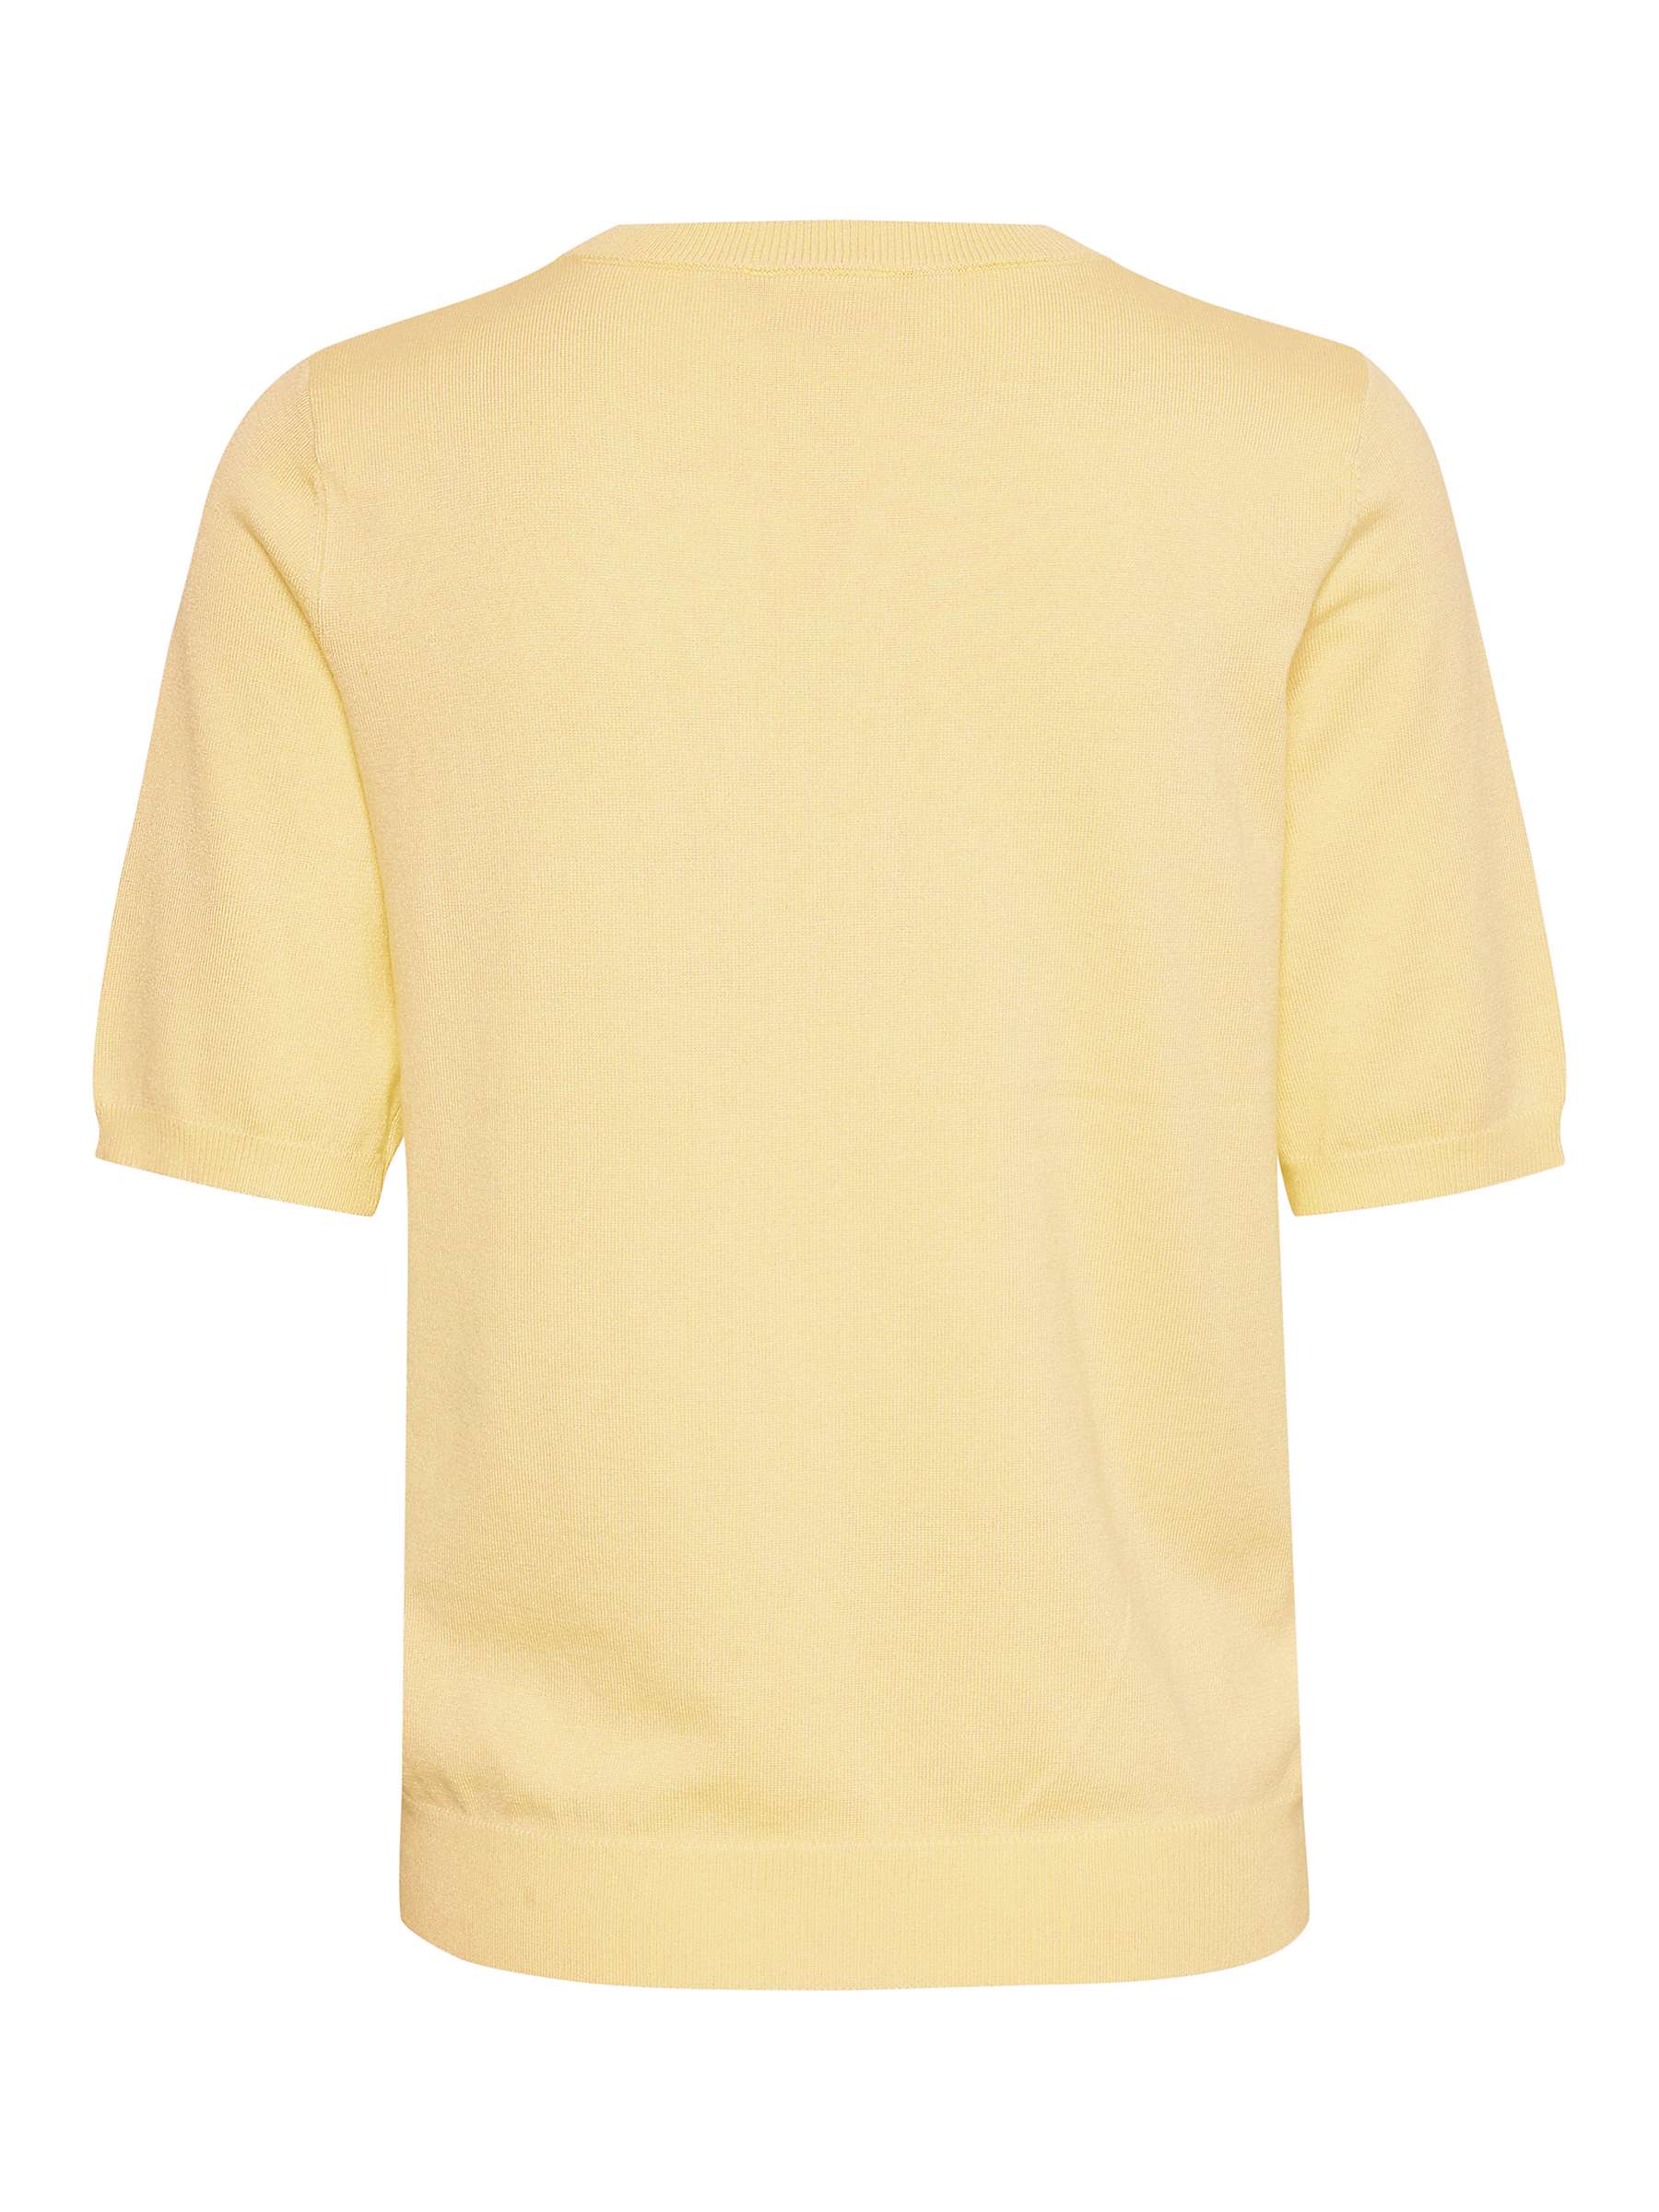 Buy KAFFE Lizza Short Sleeve Round Neck Pullover Online at johnlewis.com